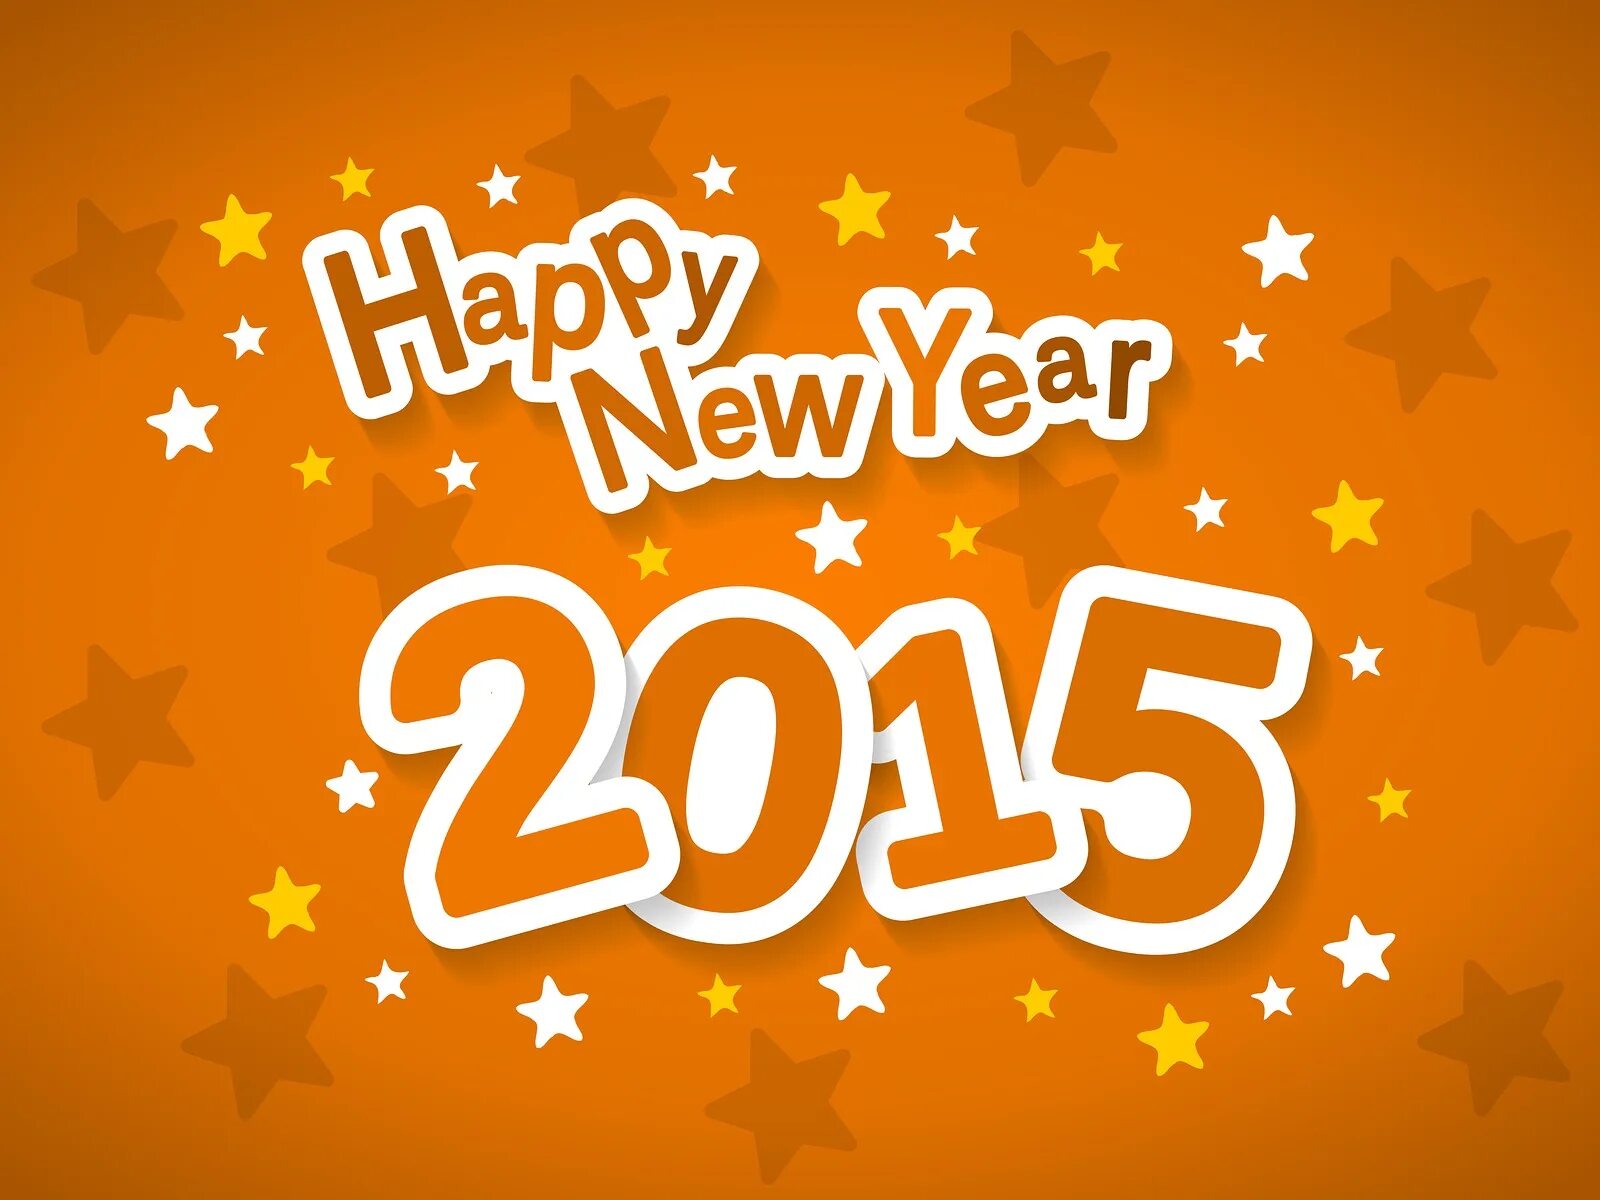 New years на русском. Happy New year. Хэппи Нью еар. Хэппи новый год. Новогодние открытки 2015 Happy New year.